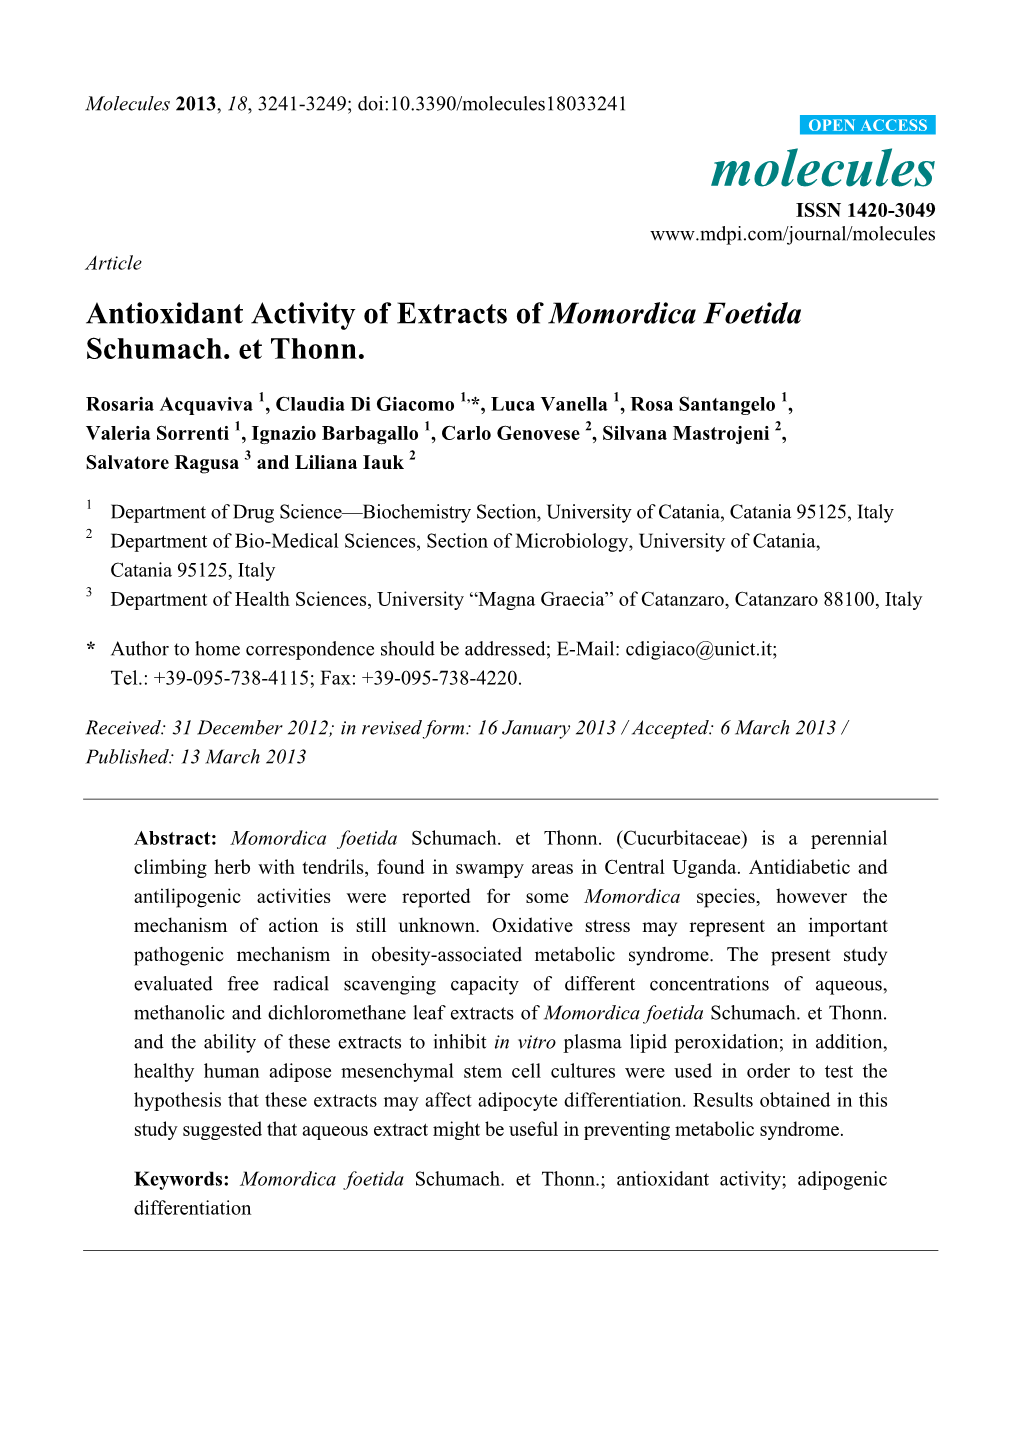 Antioxidant Activity of Extracts of Momordica Foetida Schumach. Et Thonn